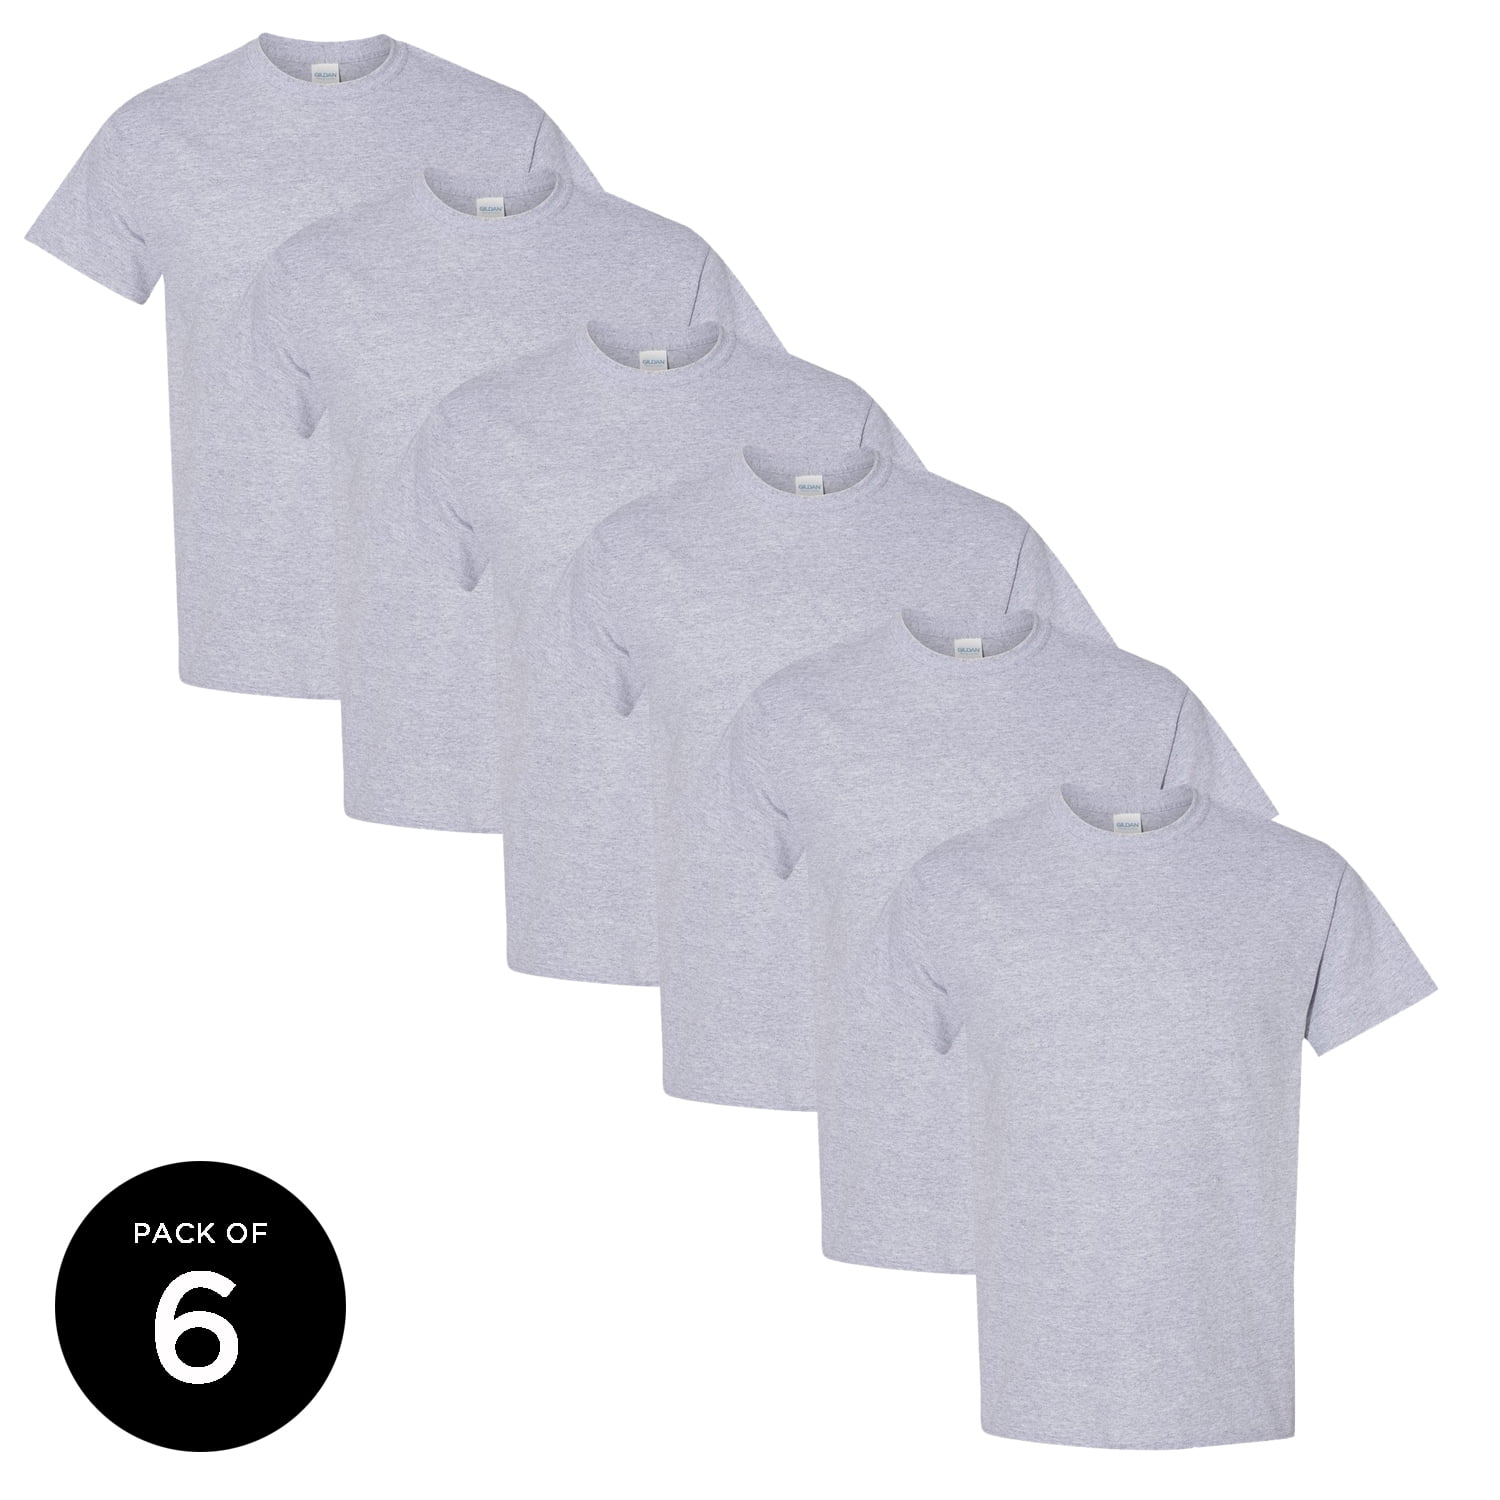 Gildan Men Grey T-Shirts Value Pack Shirts for Men - Single OR